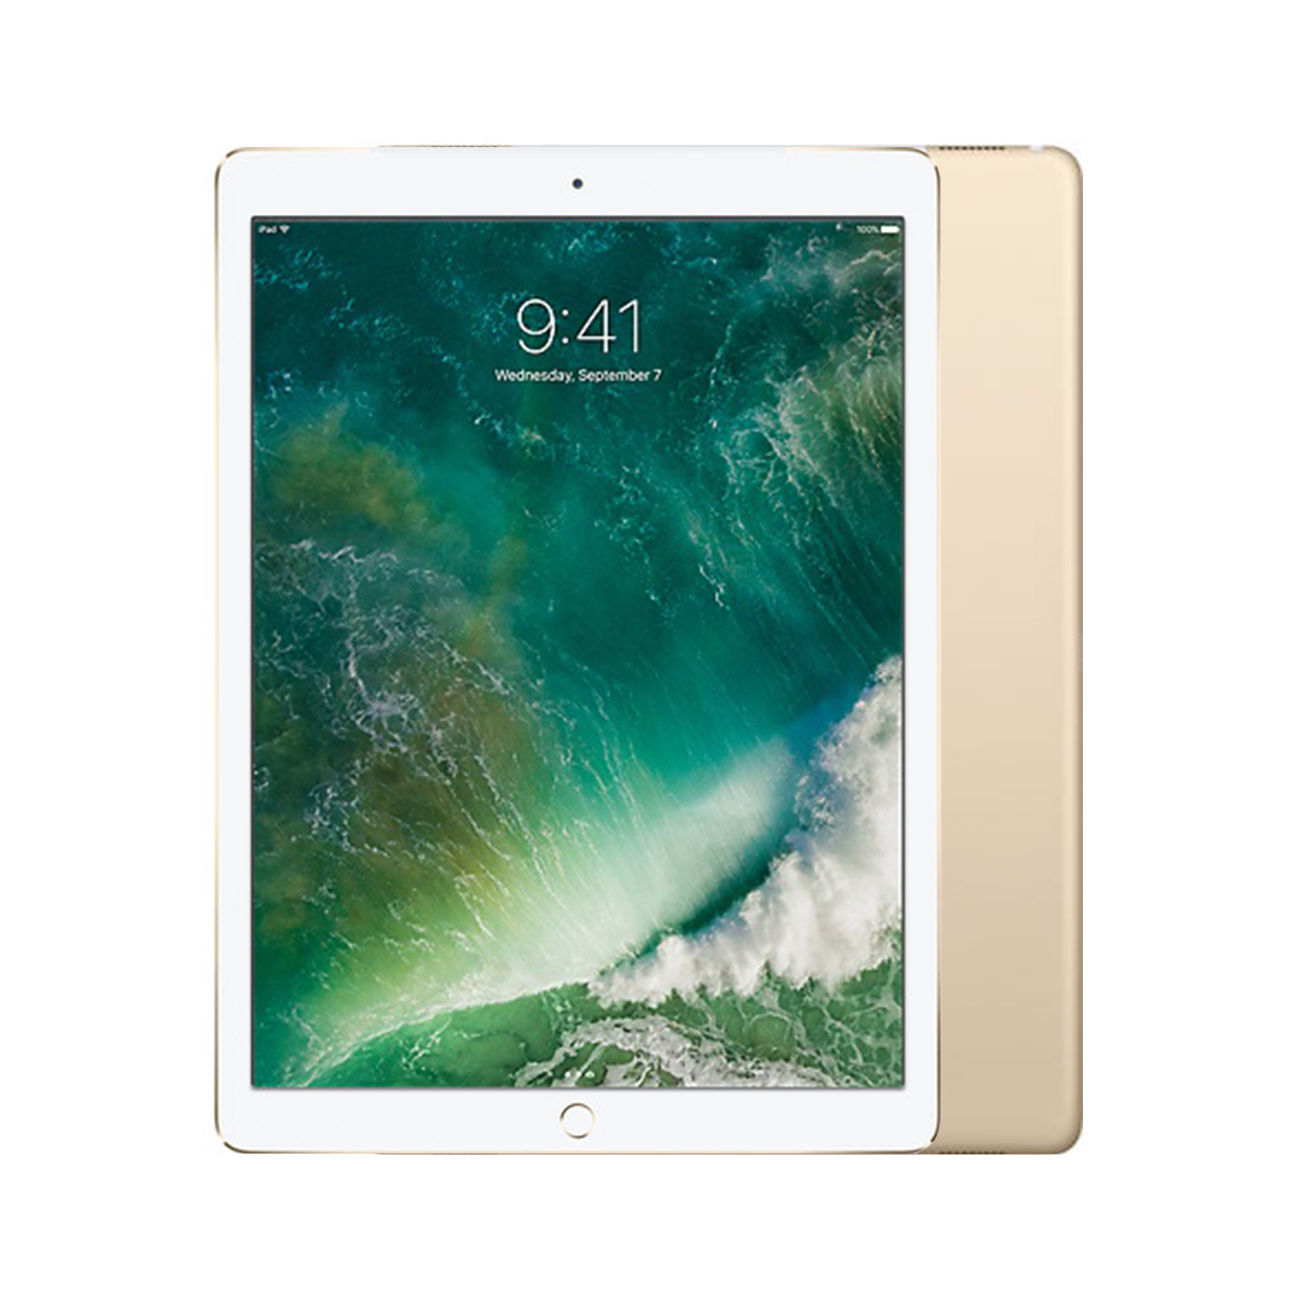 Apple iPad Pro 9.7 Wi-Fi + Cellular [32GB] [Gold] [Very Good] [12M]